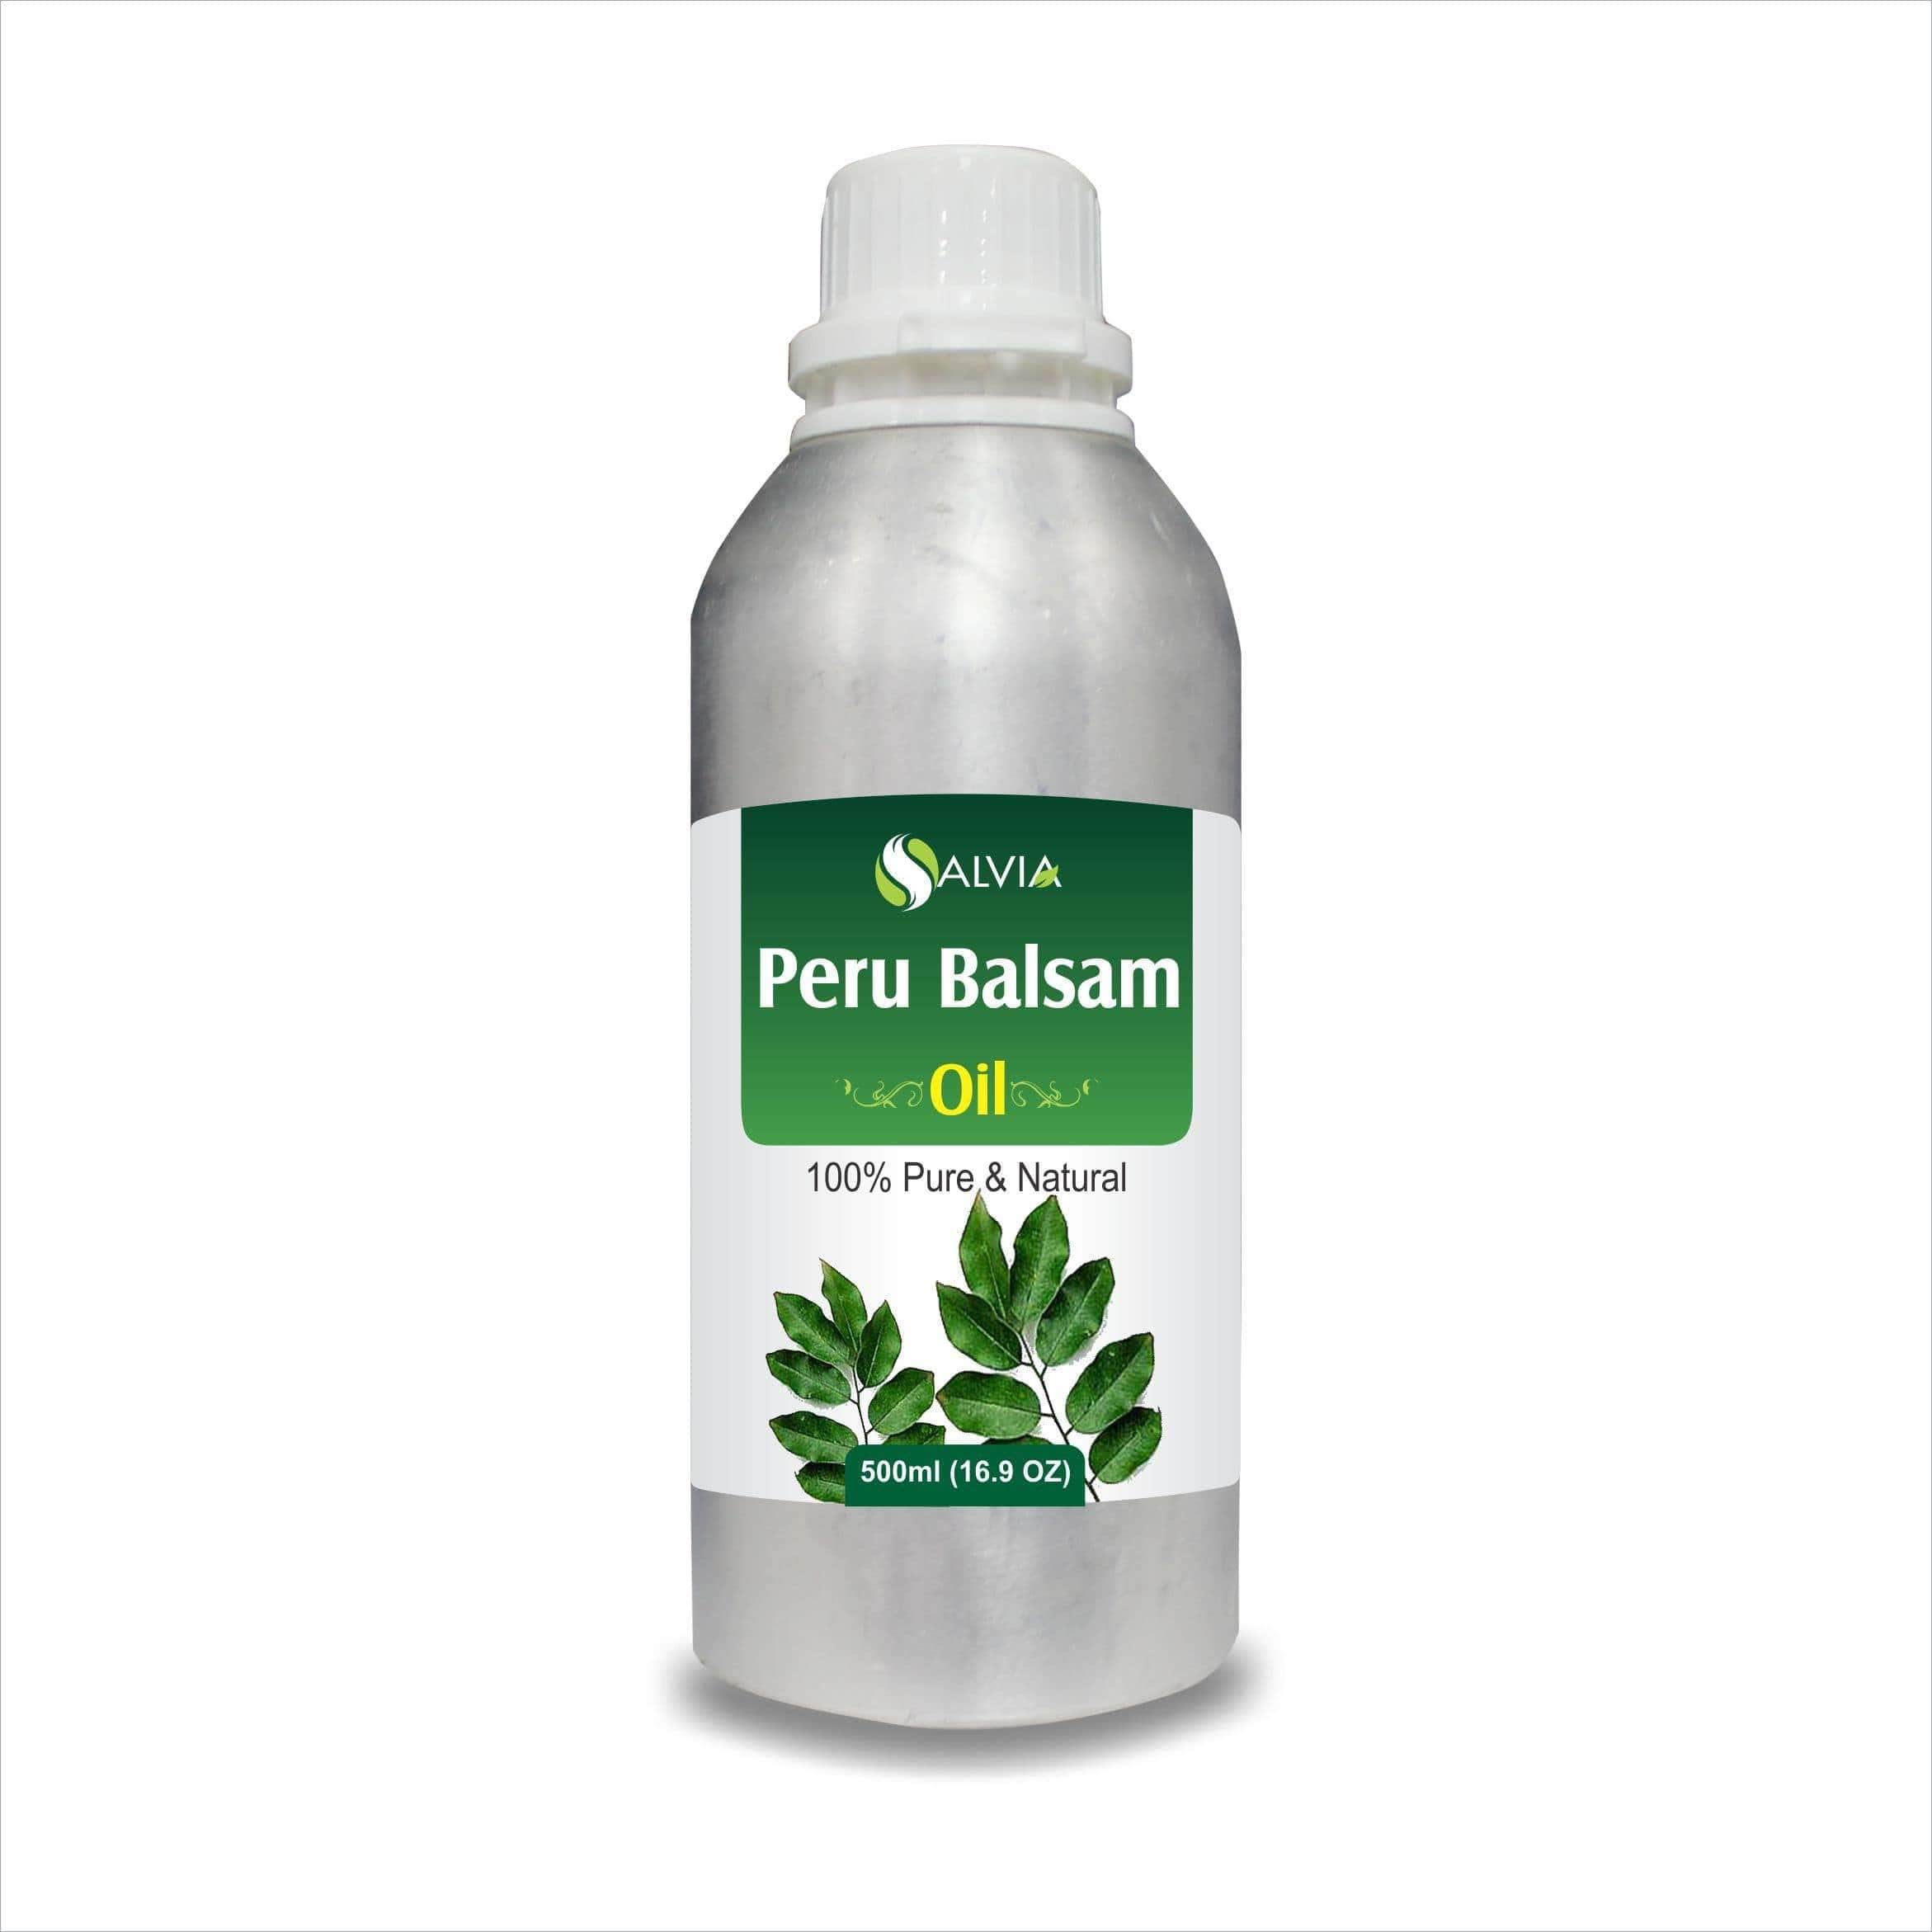 balsam skin benefits